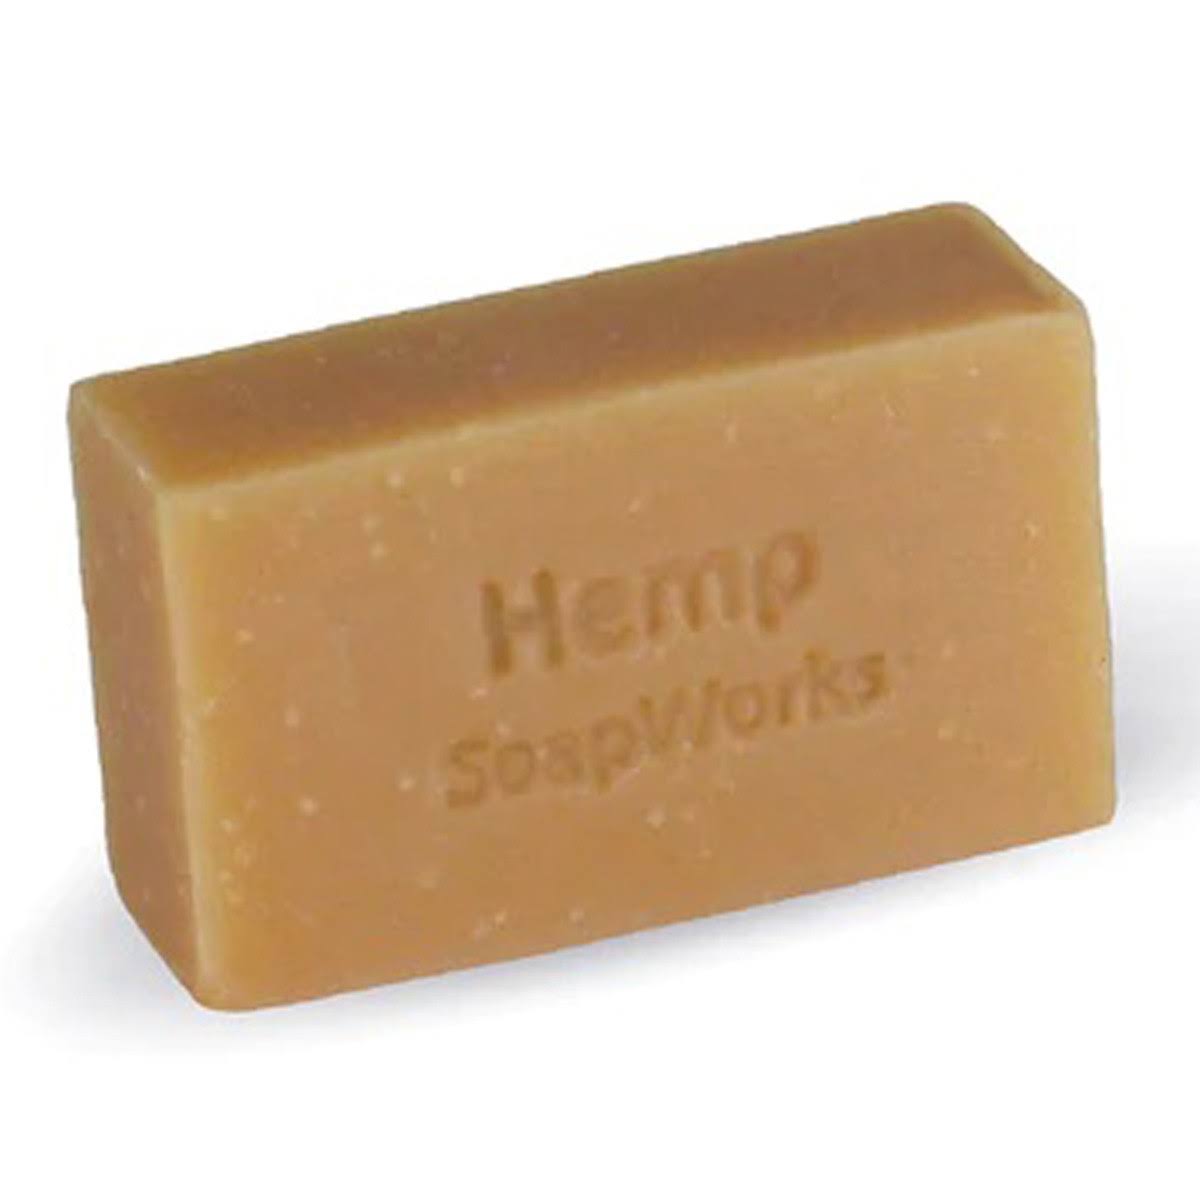 Soap Works Hemp Oil Soap Bar